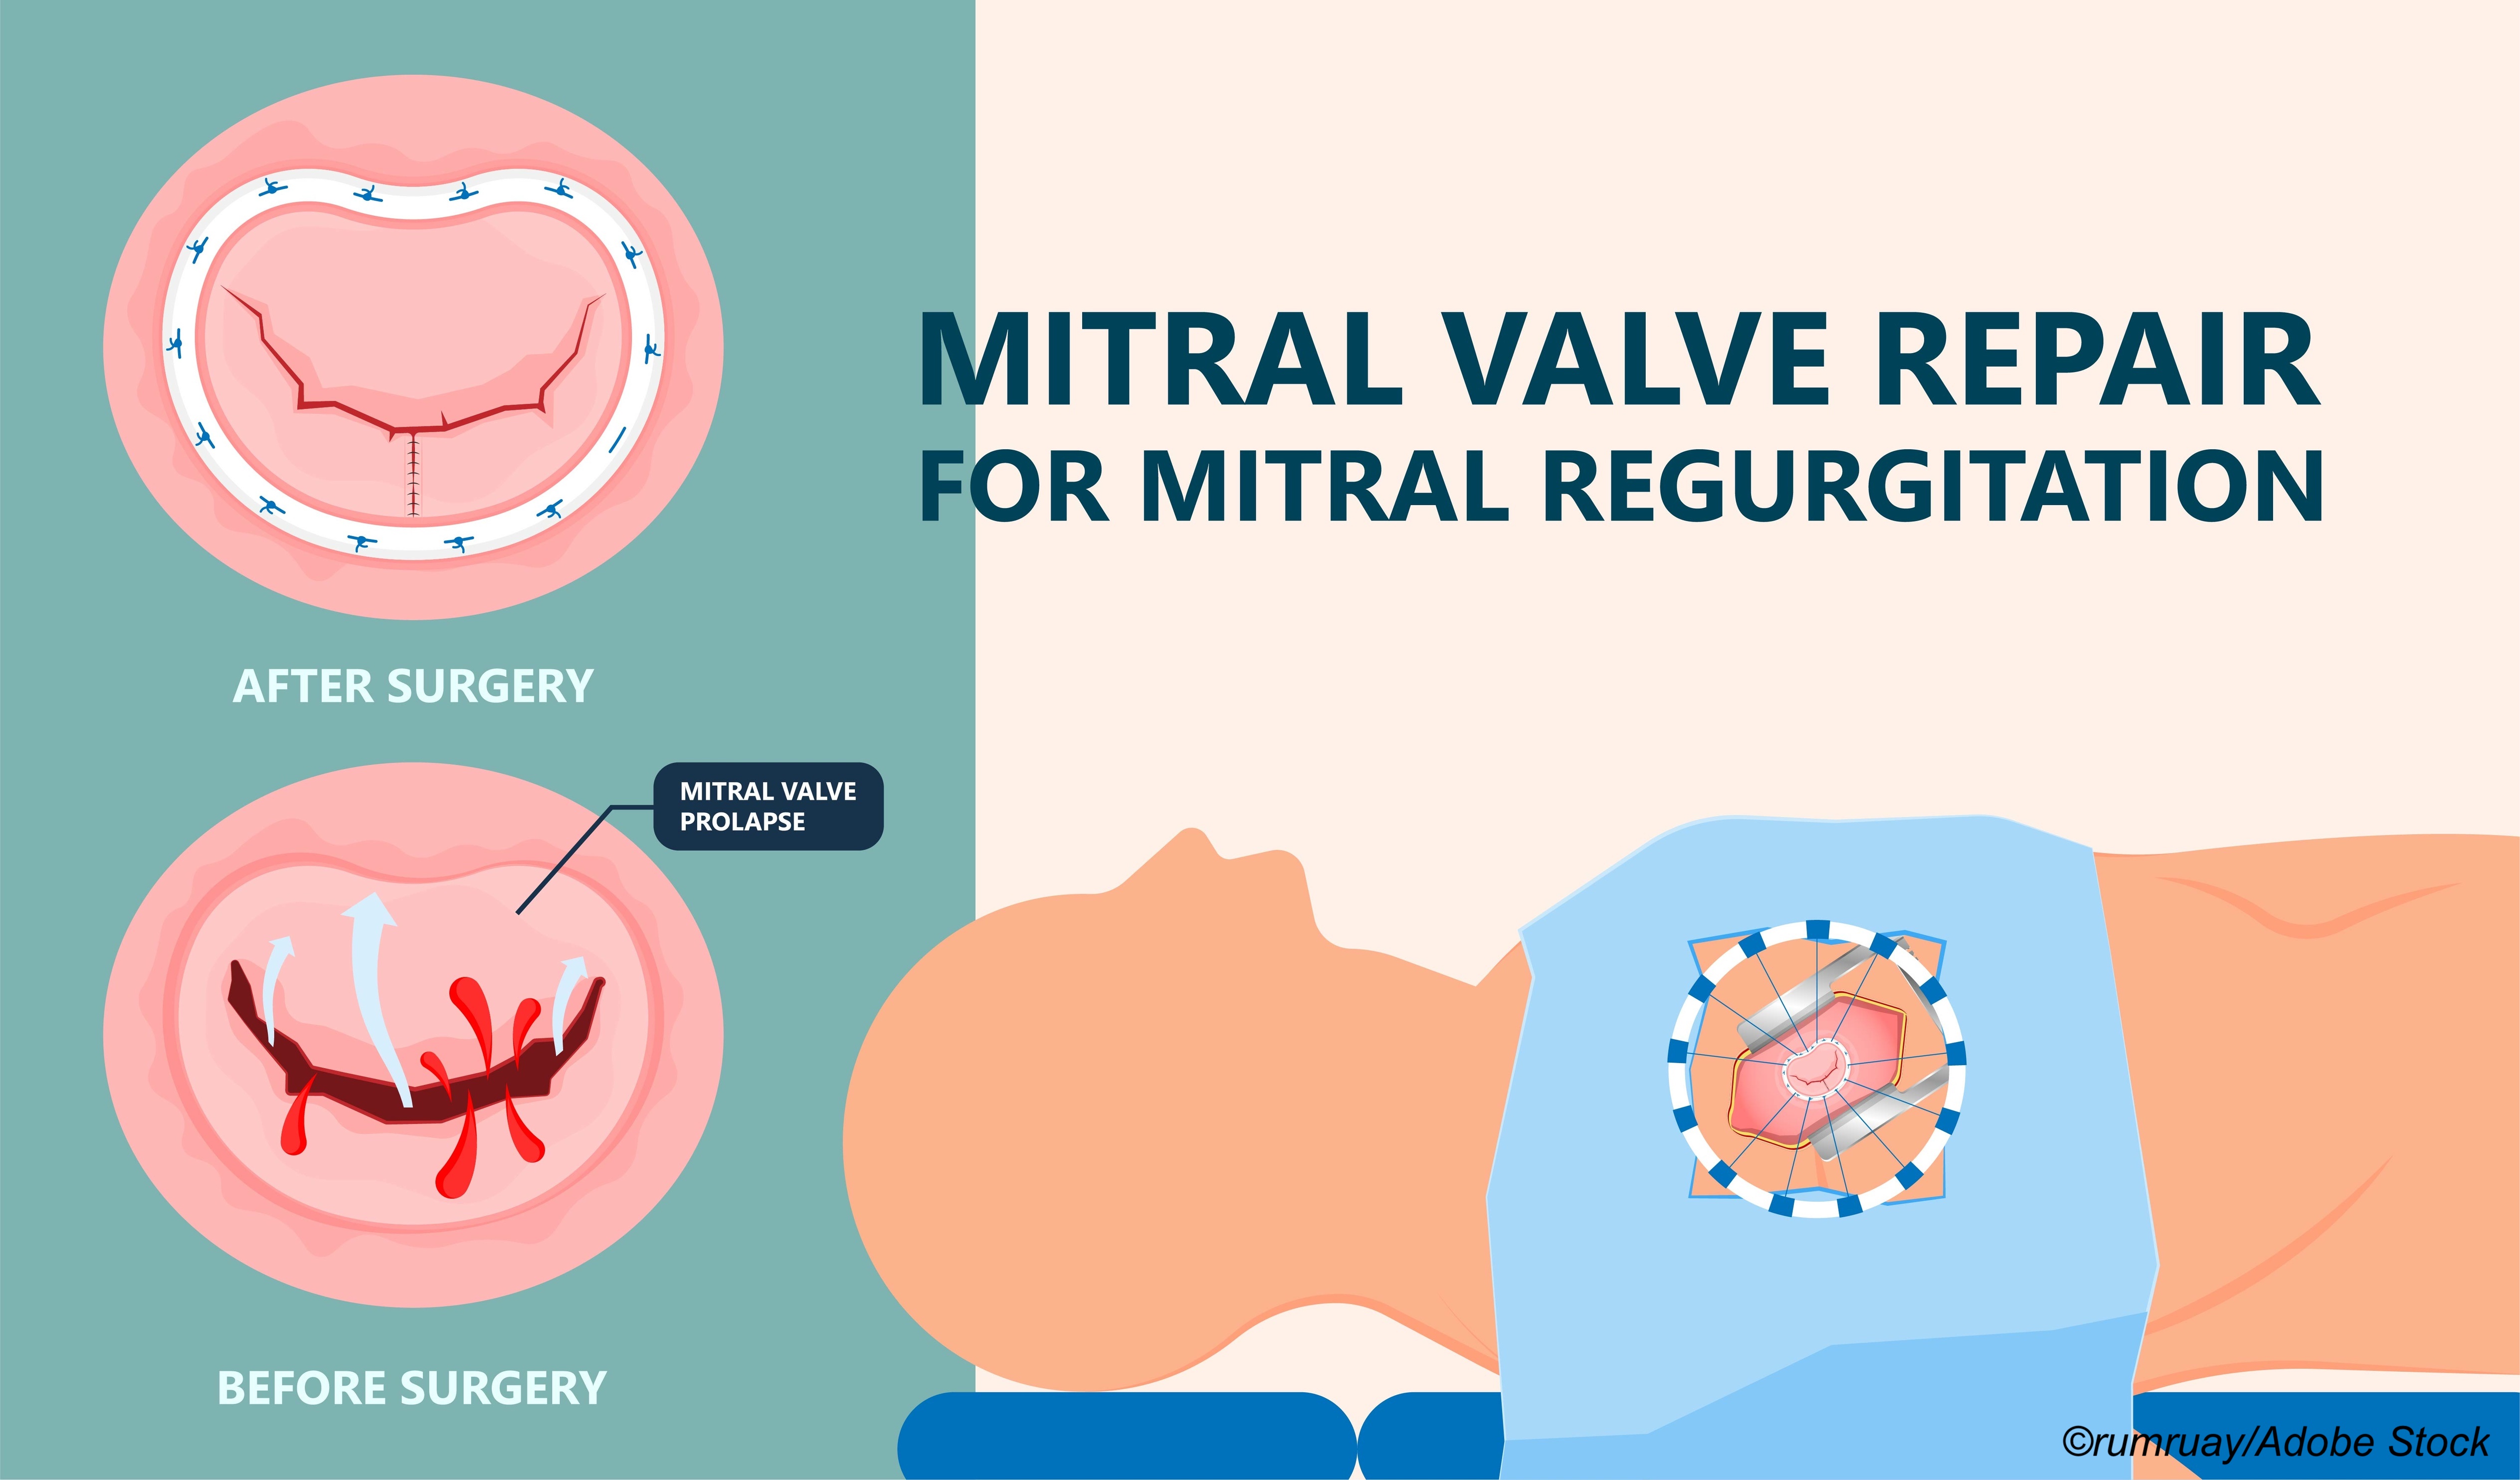 Secondary Mitral Regurgitation: COAPT Inclusion Criteria Helpful in M-TEER Patient Selection